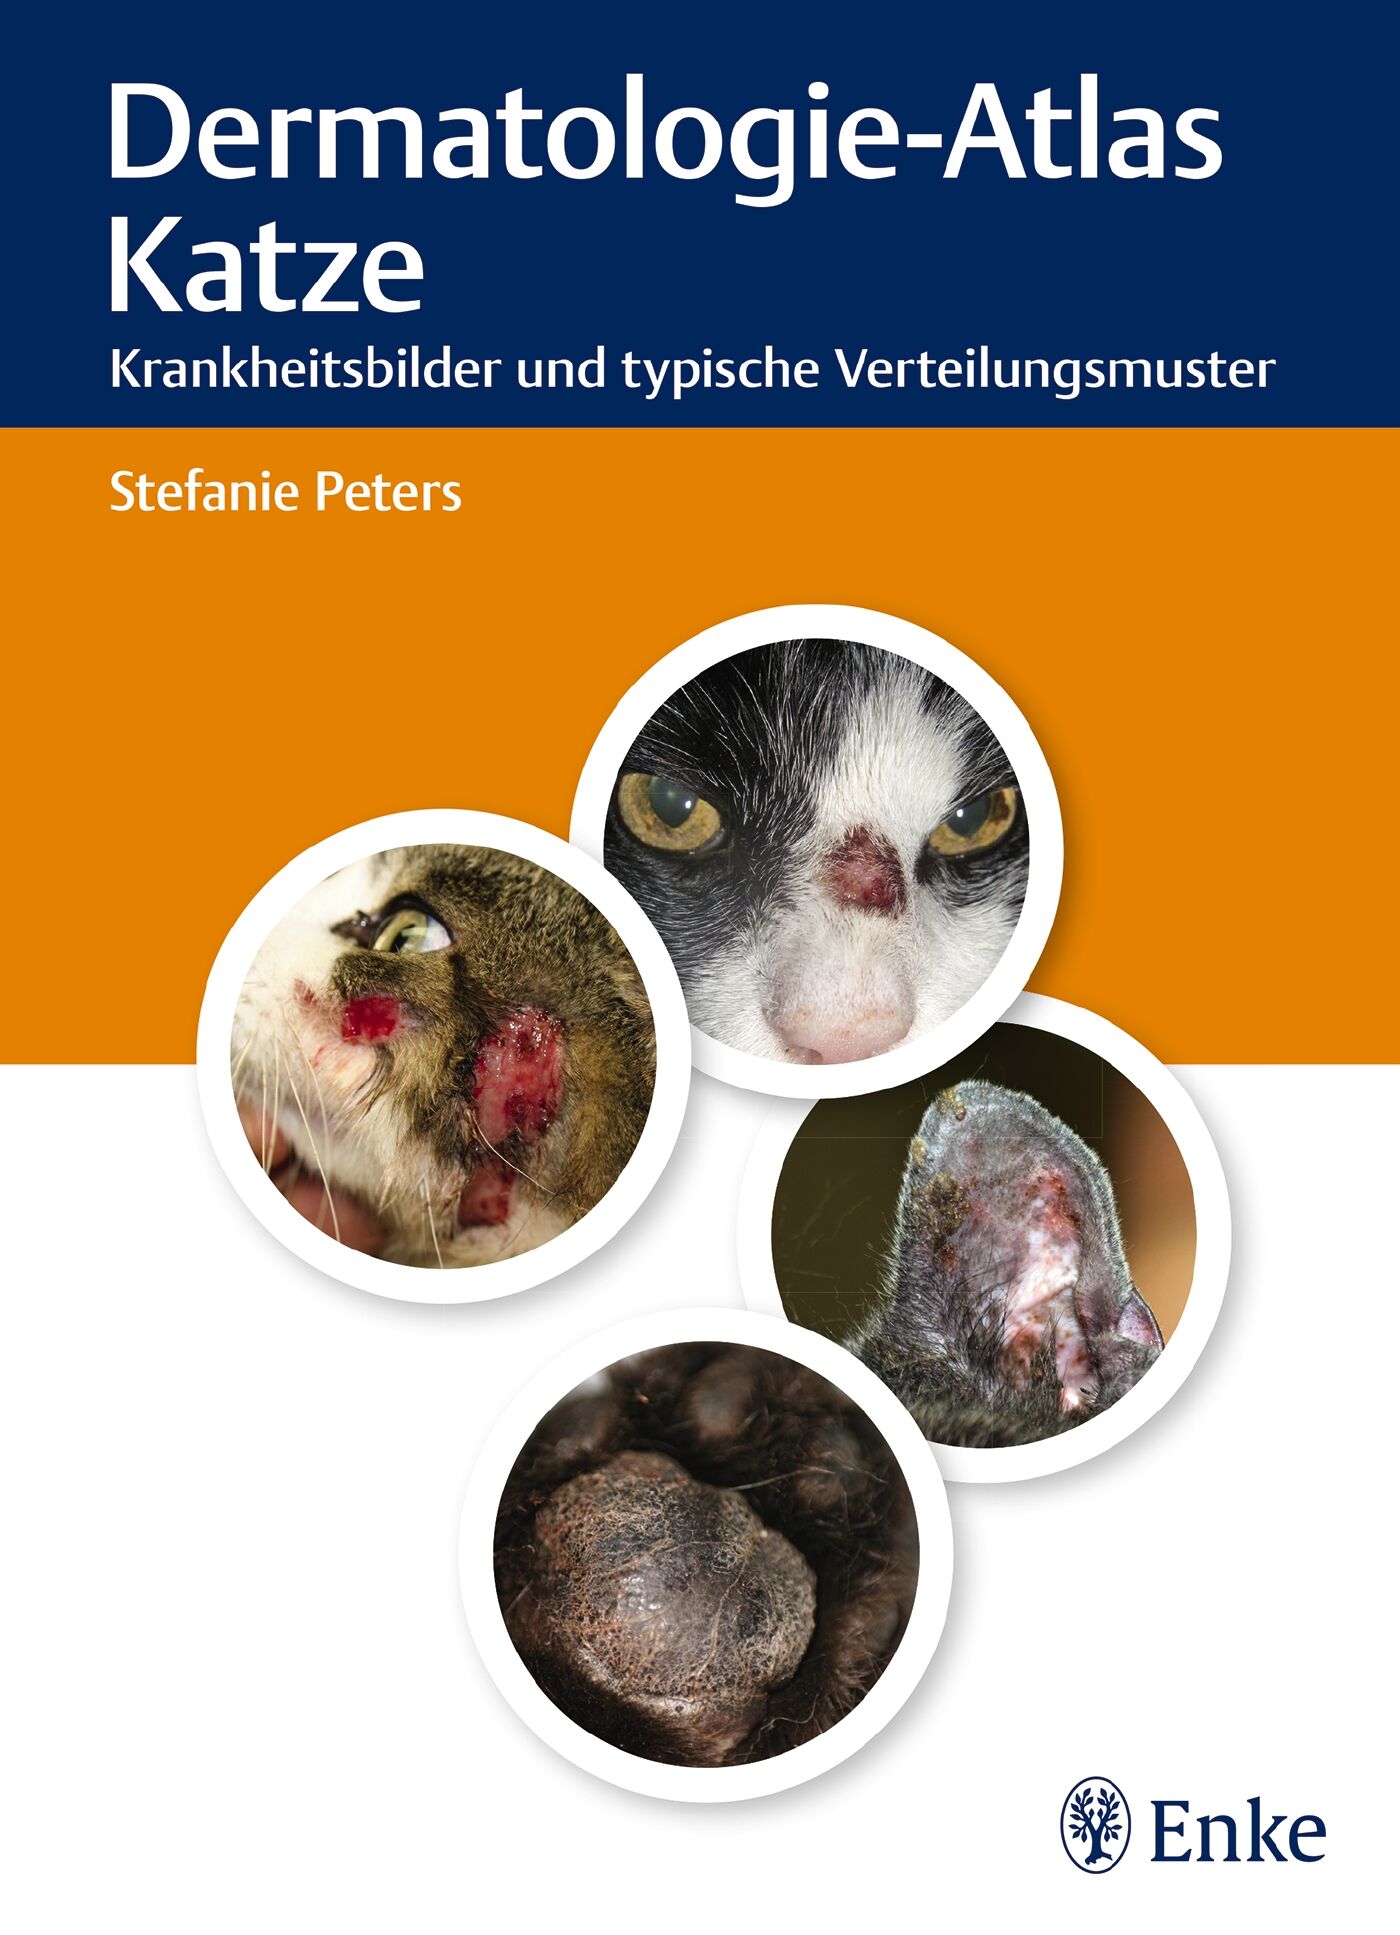 Dermatologie-Atlas Katze, 9783132194519